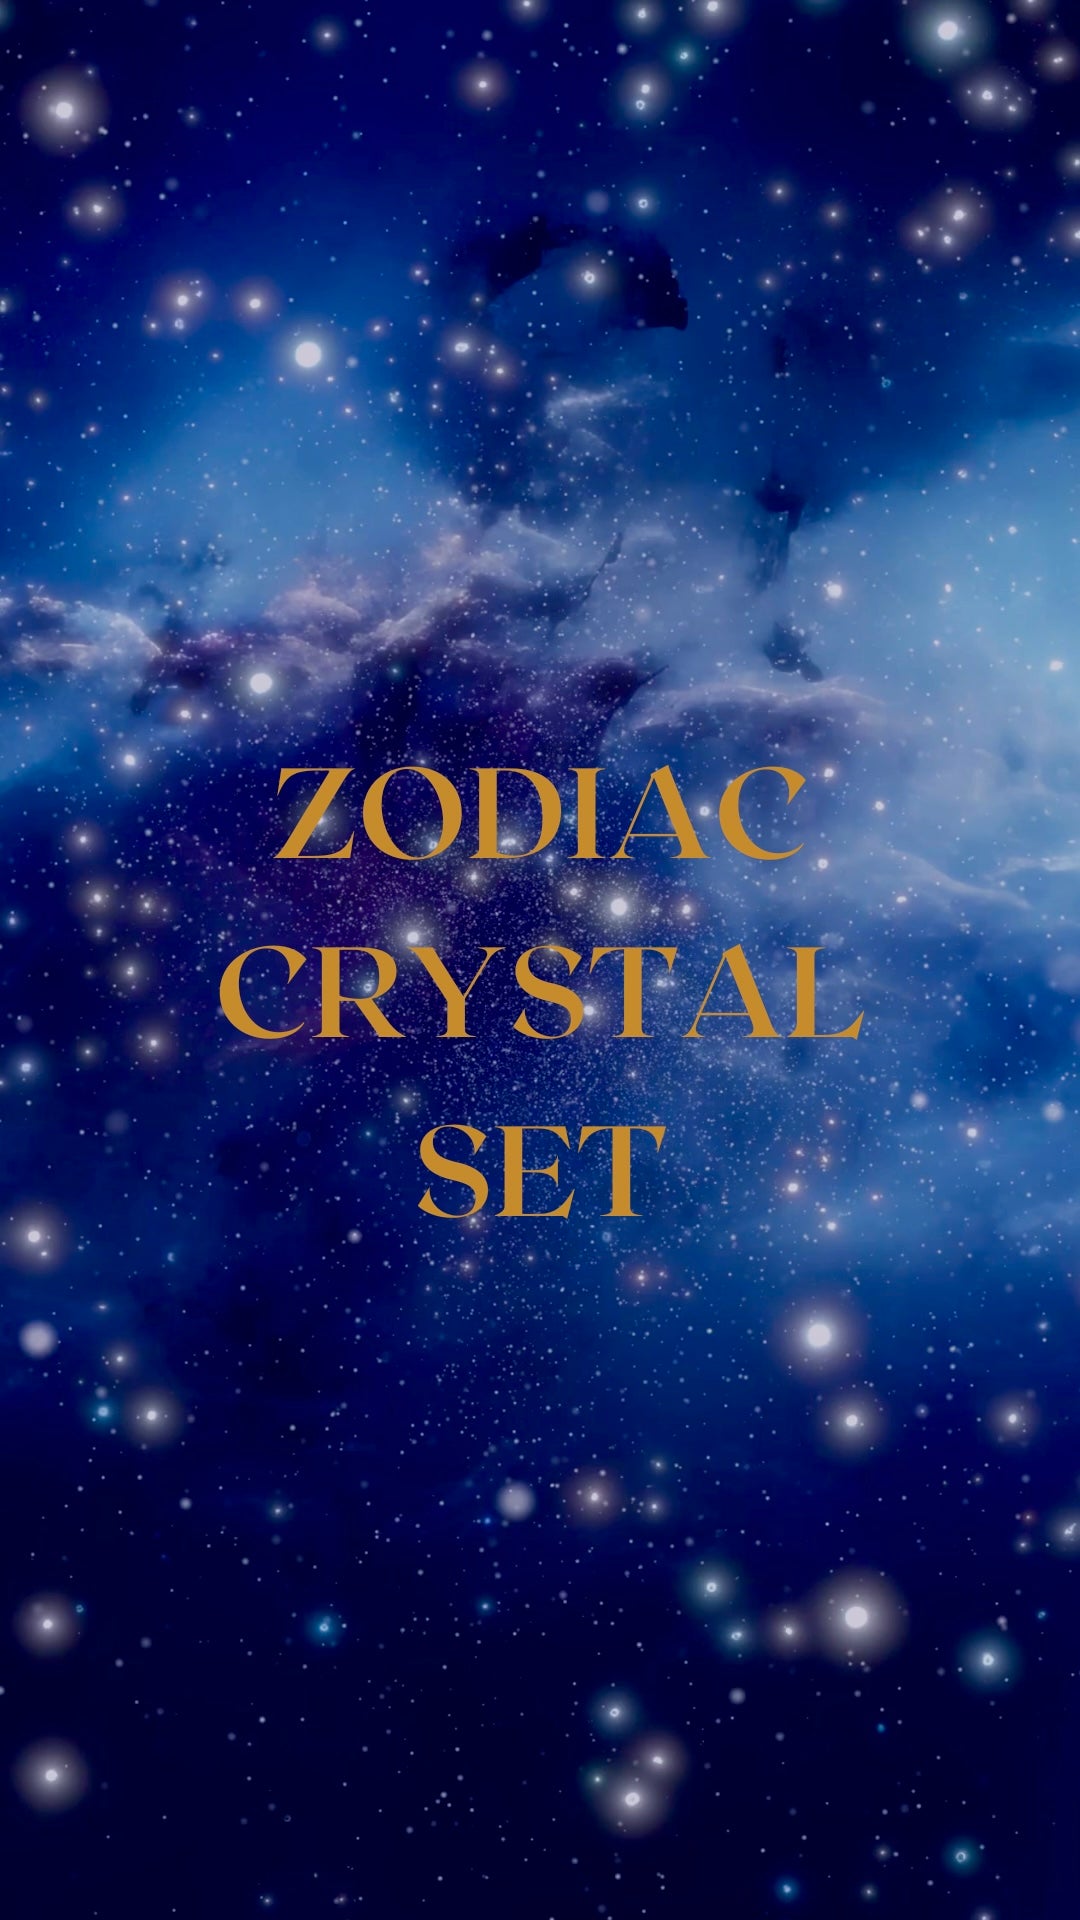 Crystal Wonderland Zodiac Crystal Set Aquarius